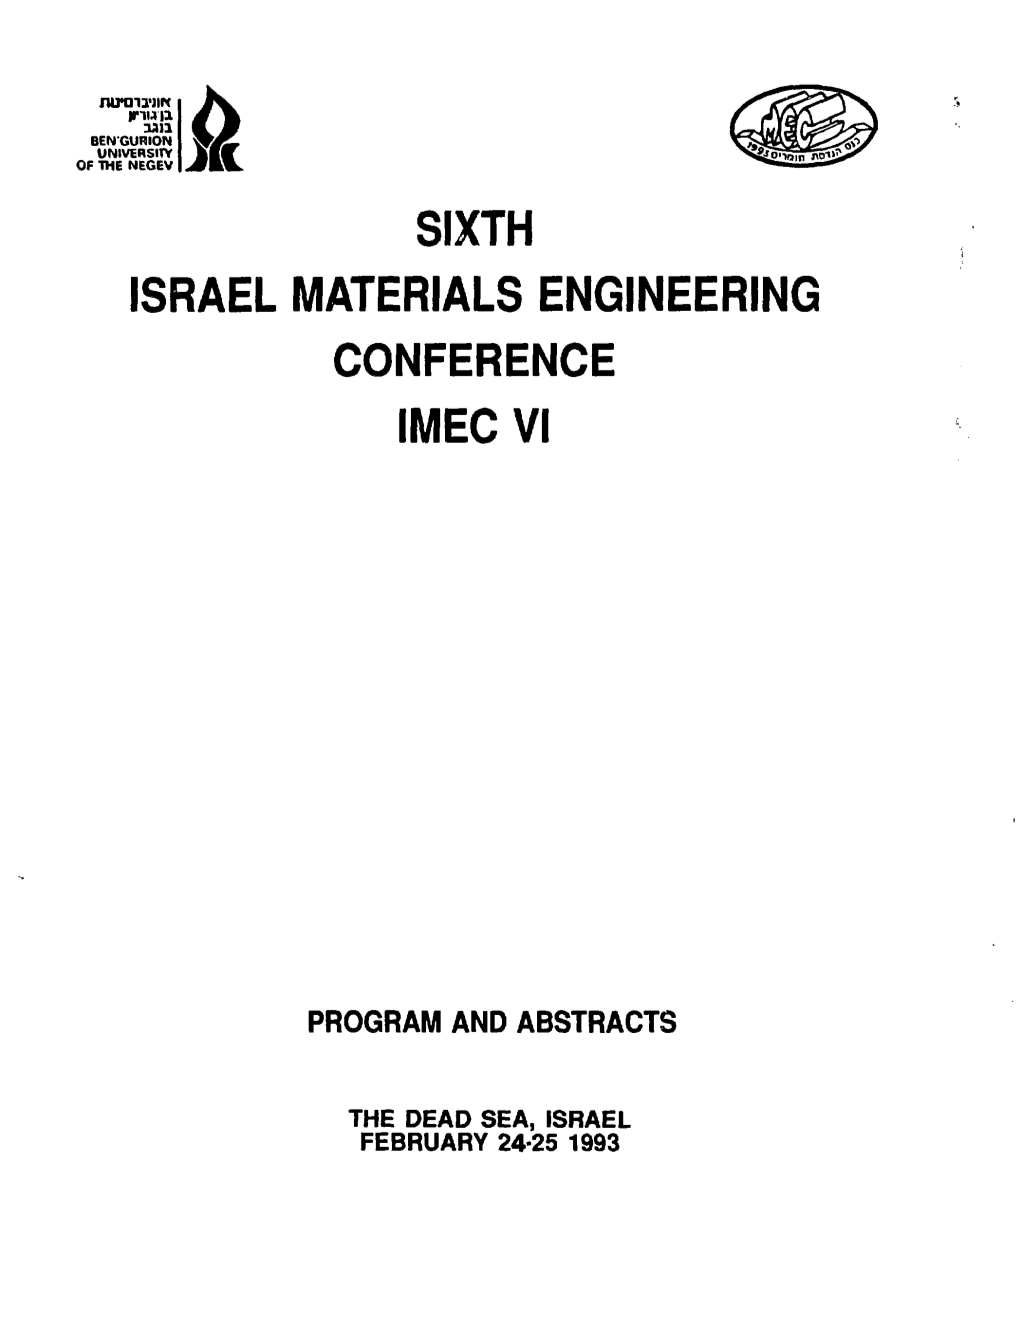 Sixth Israel Materials Engineering Conference Imec Vi